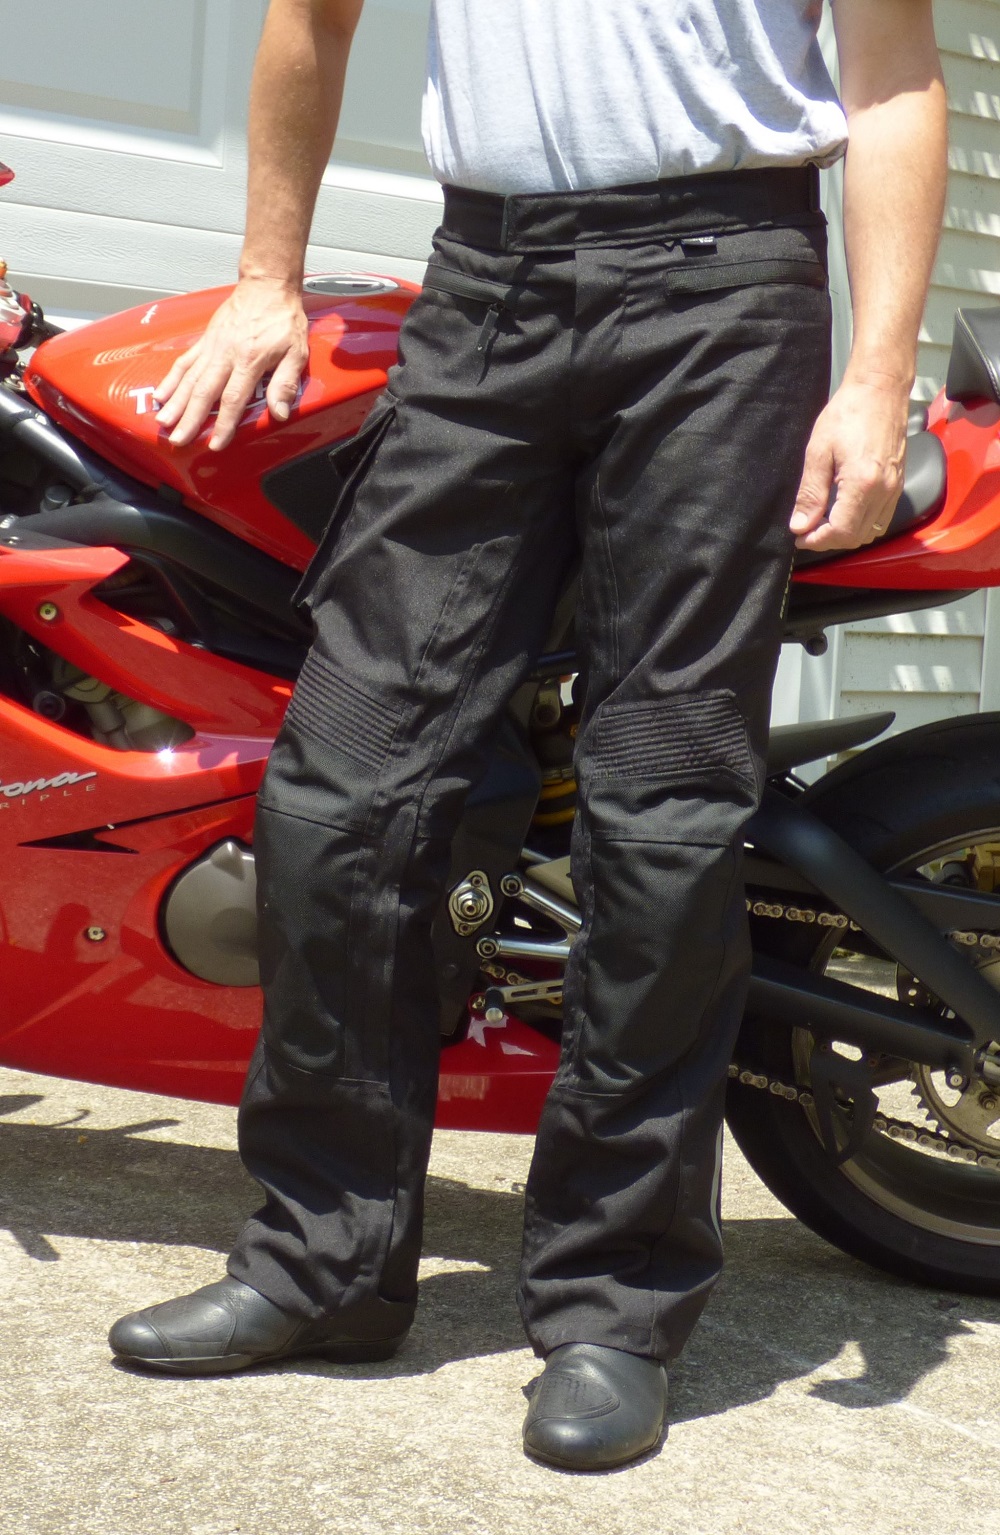 REV'IT Enterprise II motorcycle pants review